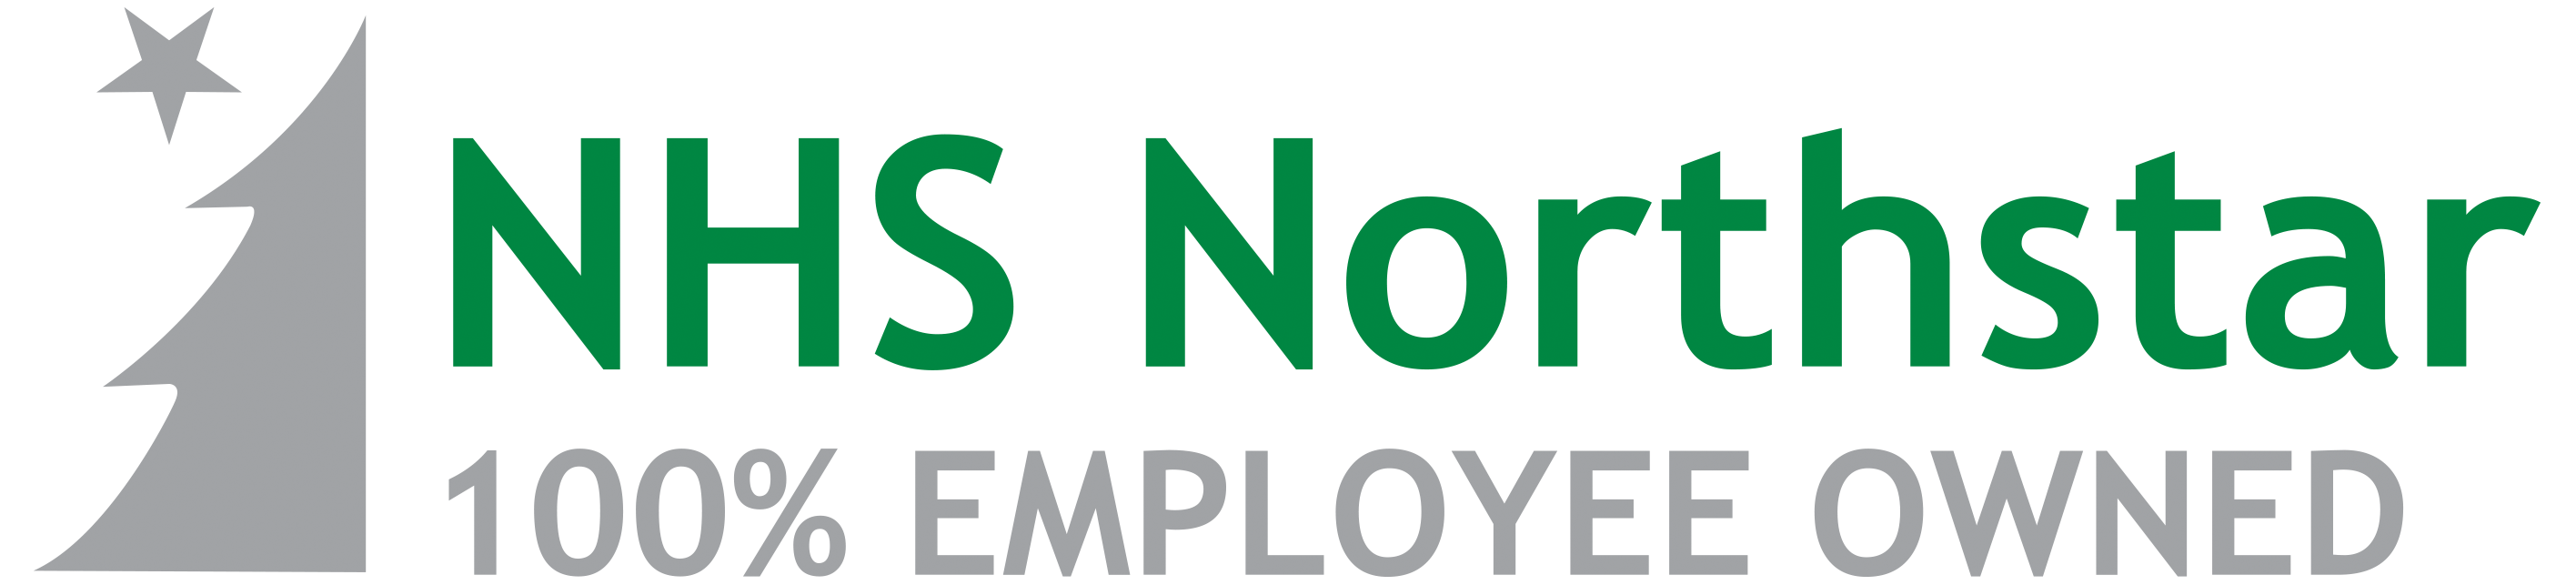 NHS Northstar Logo